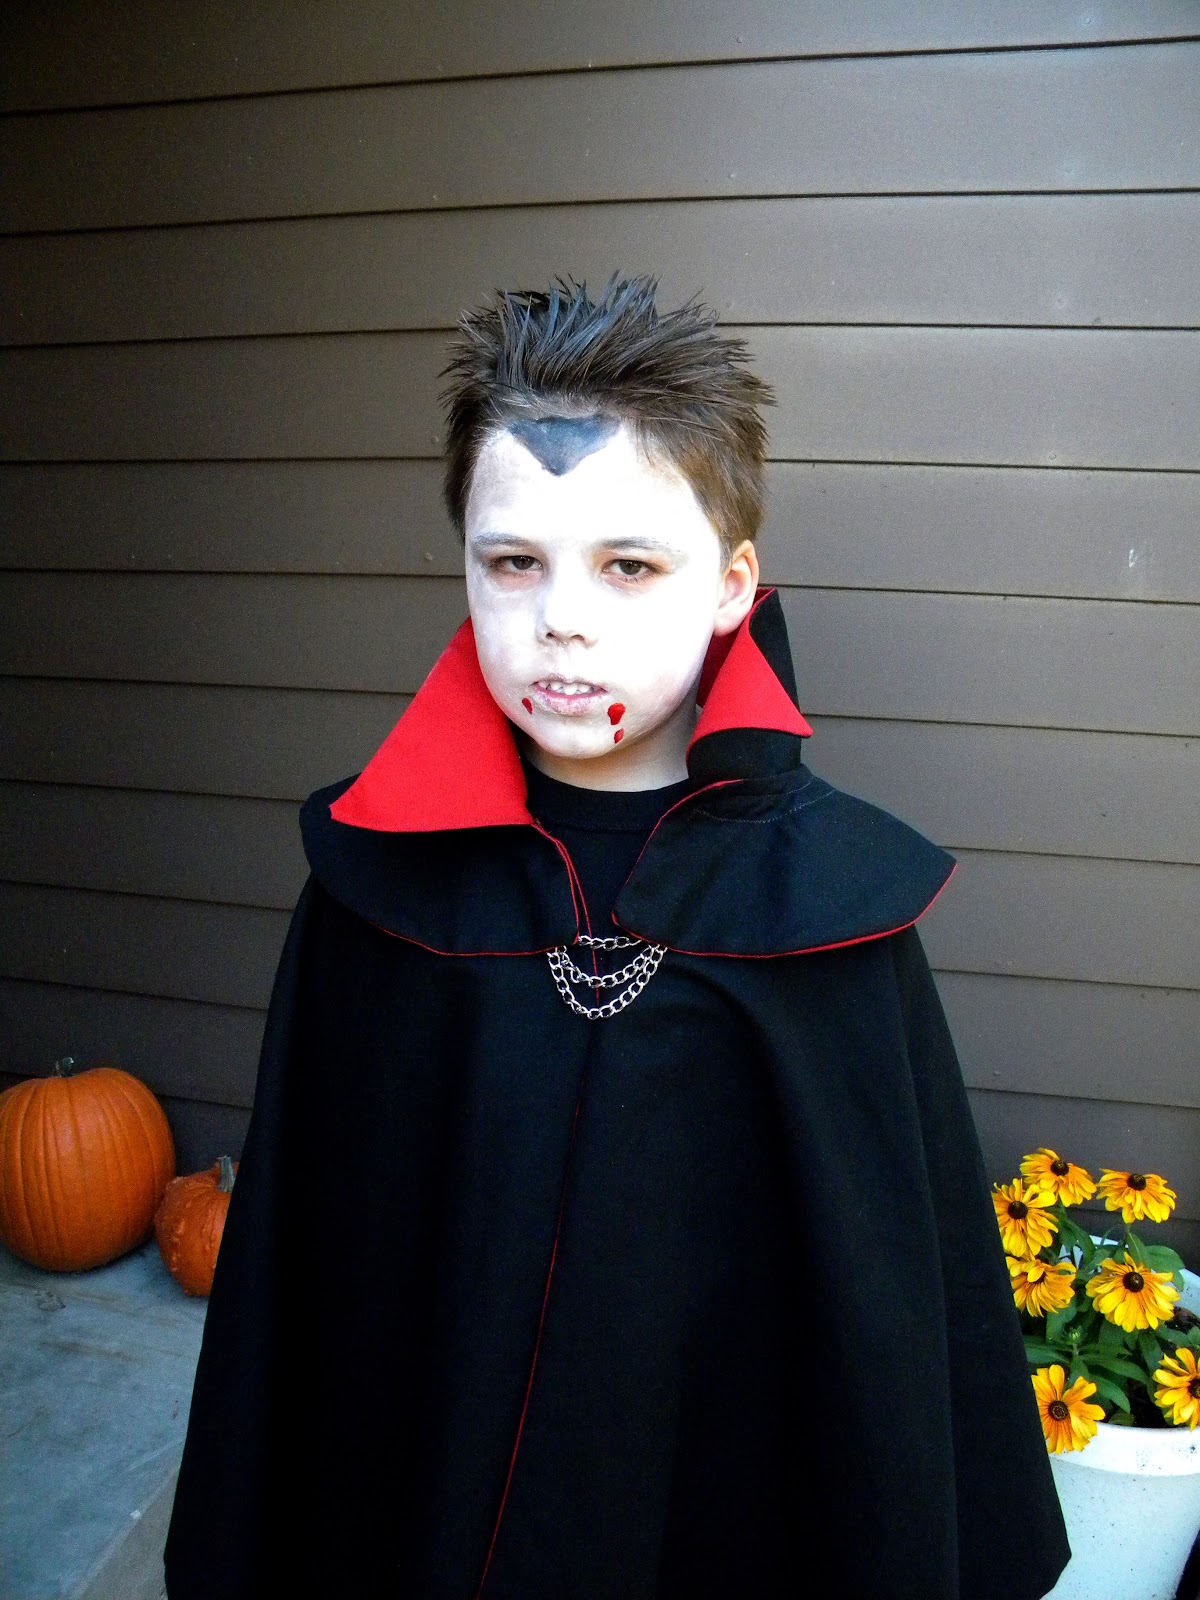 Cake and Jewelry: Dracula Halloween